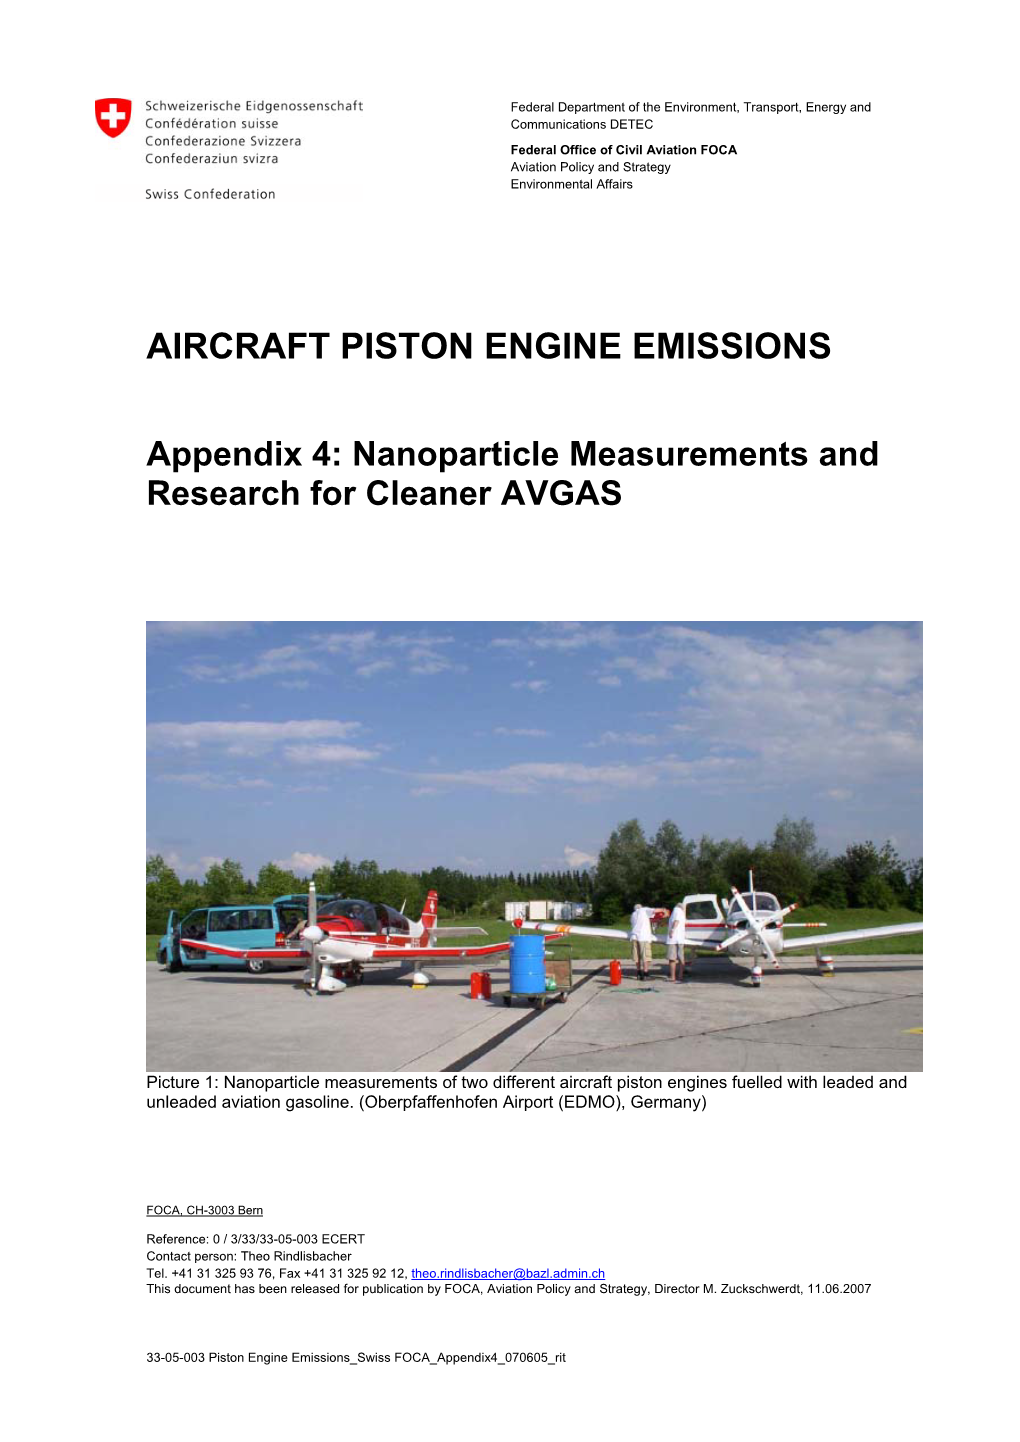 Aircraft Piston Engine Emissions